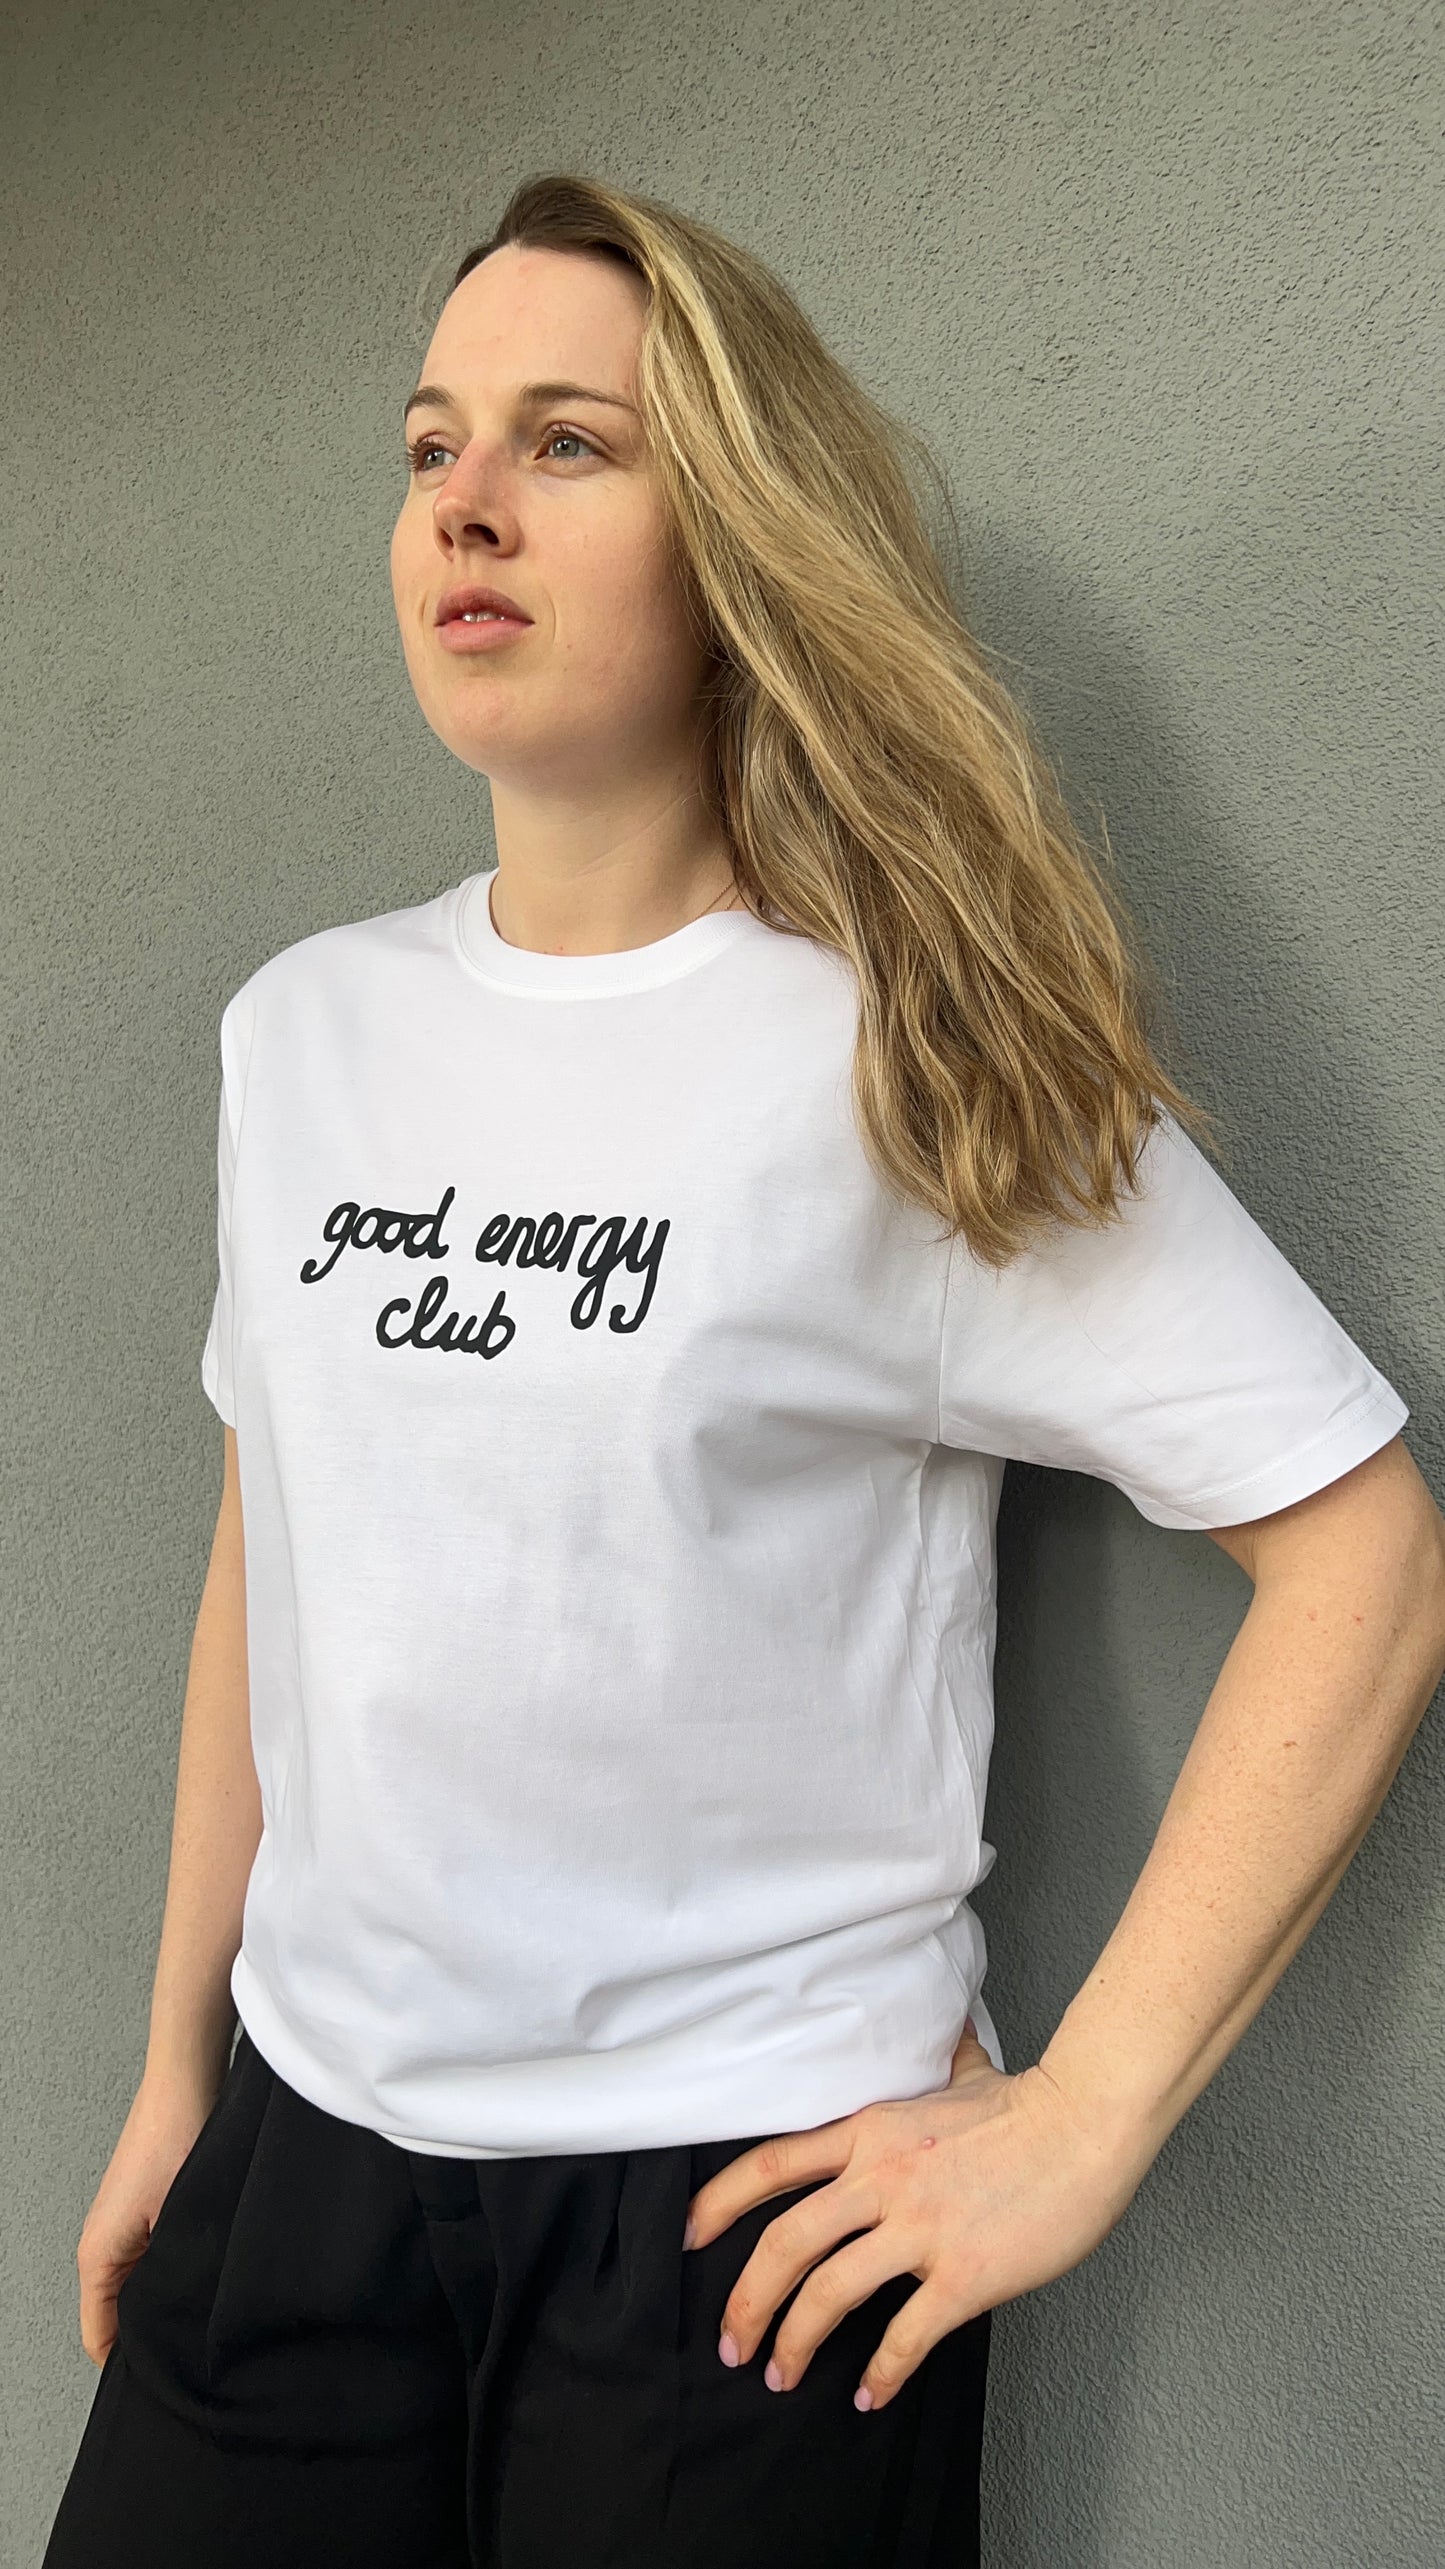 Inspirational T-Shirt: Good energy club